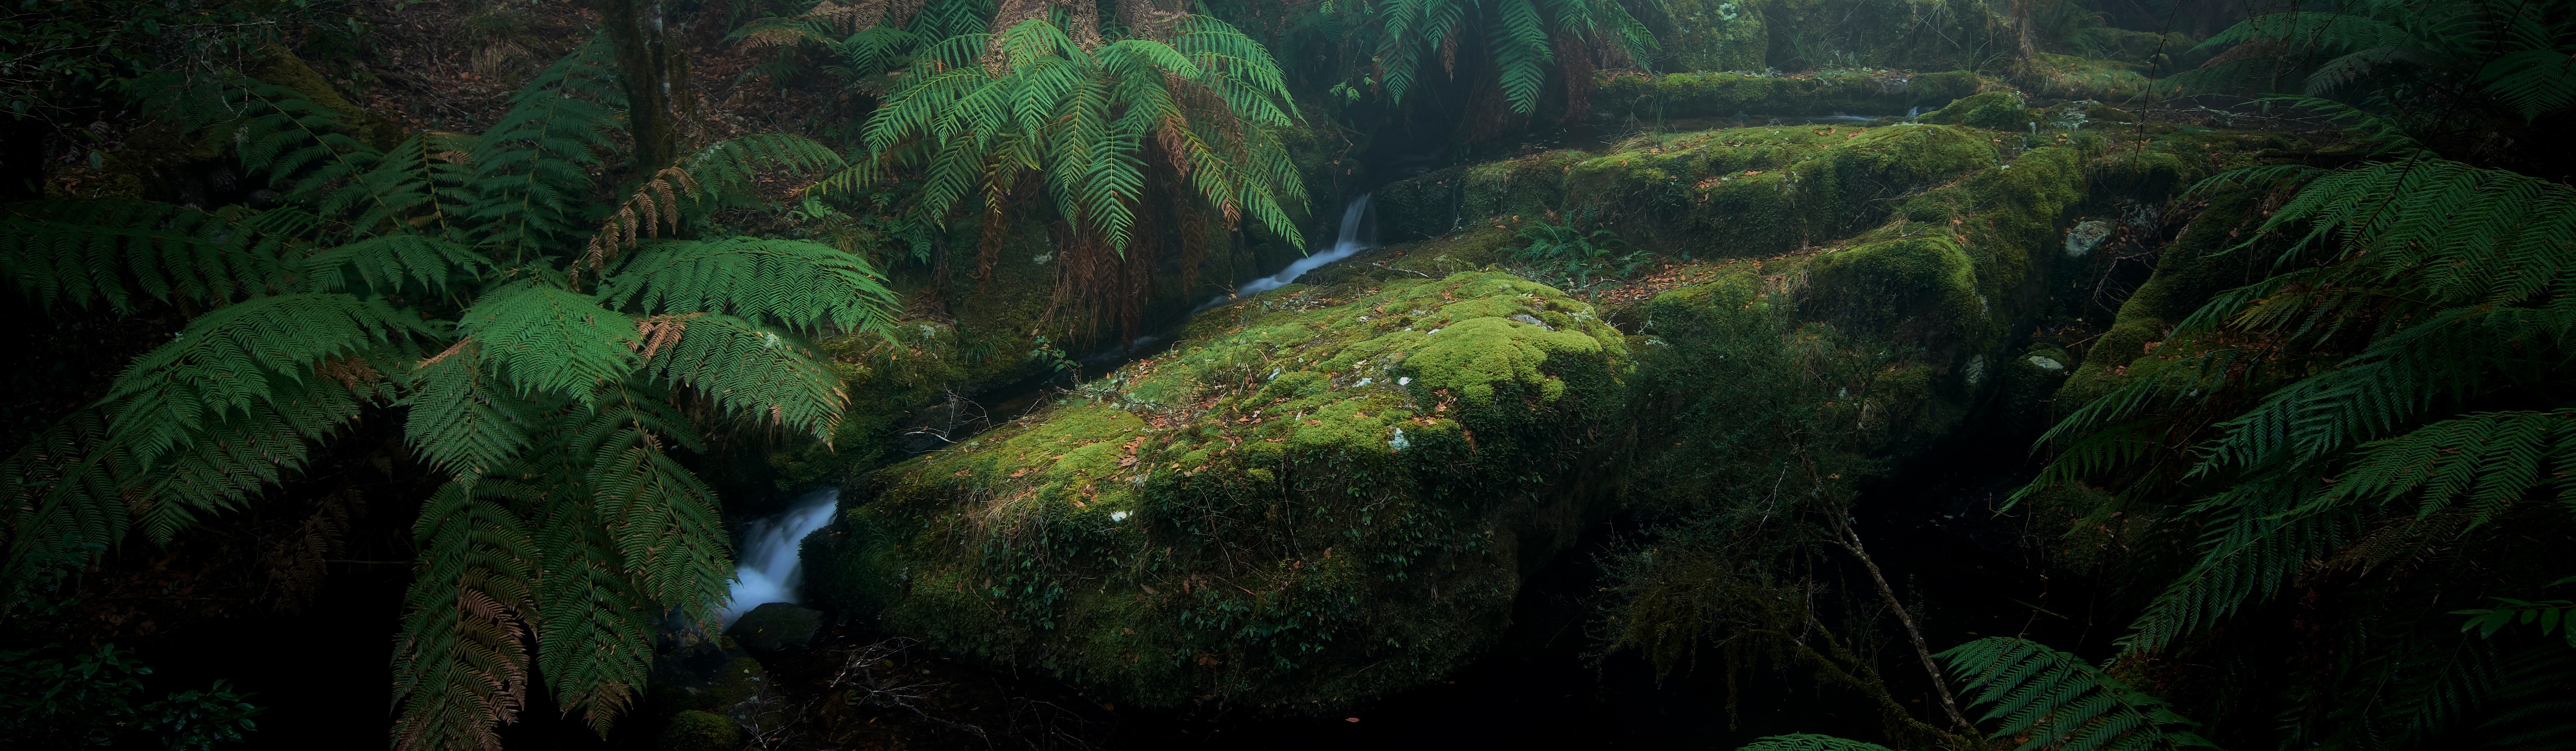 Rainforest floor view across moss covered rocks in Barrington Tops National Park